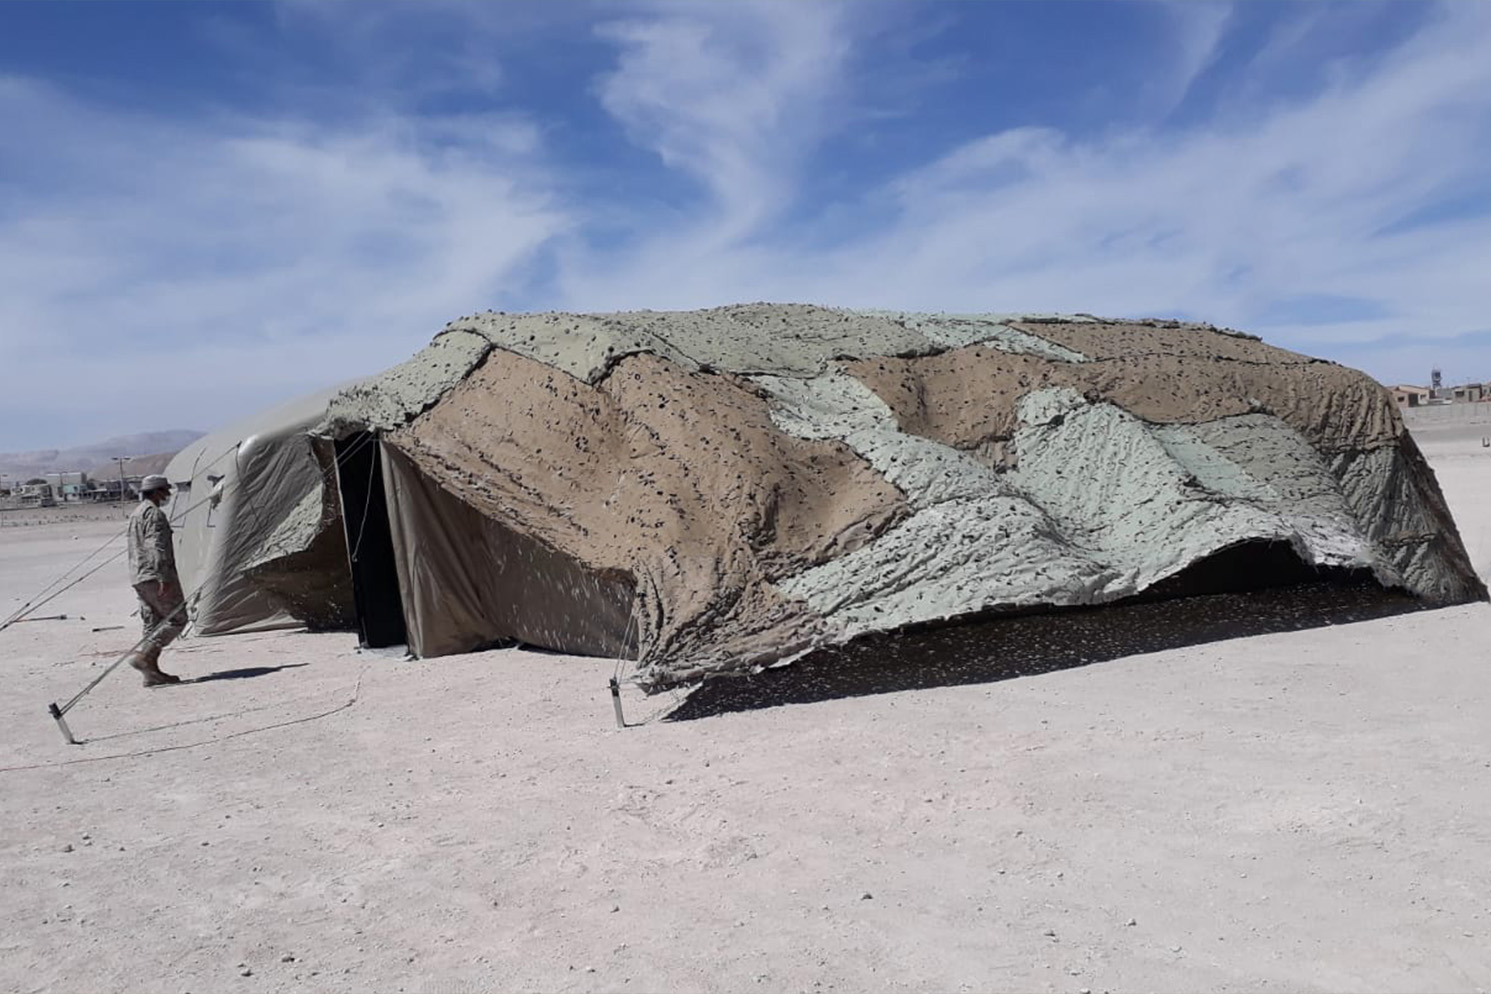 Rapid deploy Nixus PGK inflatable military tent